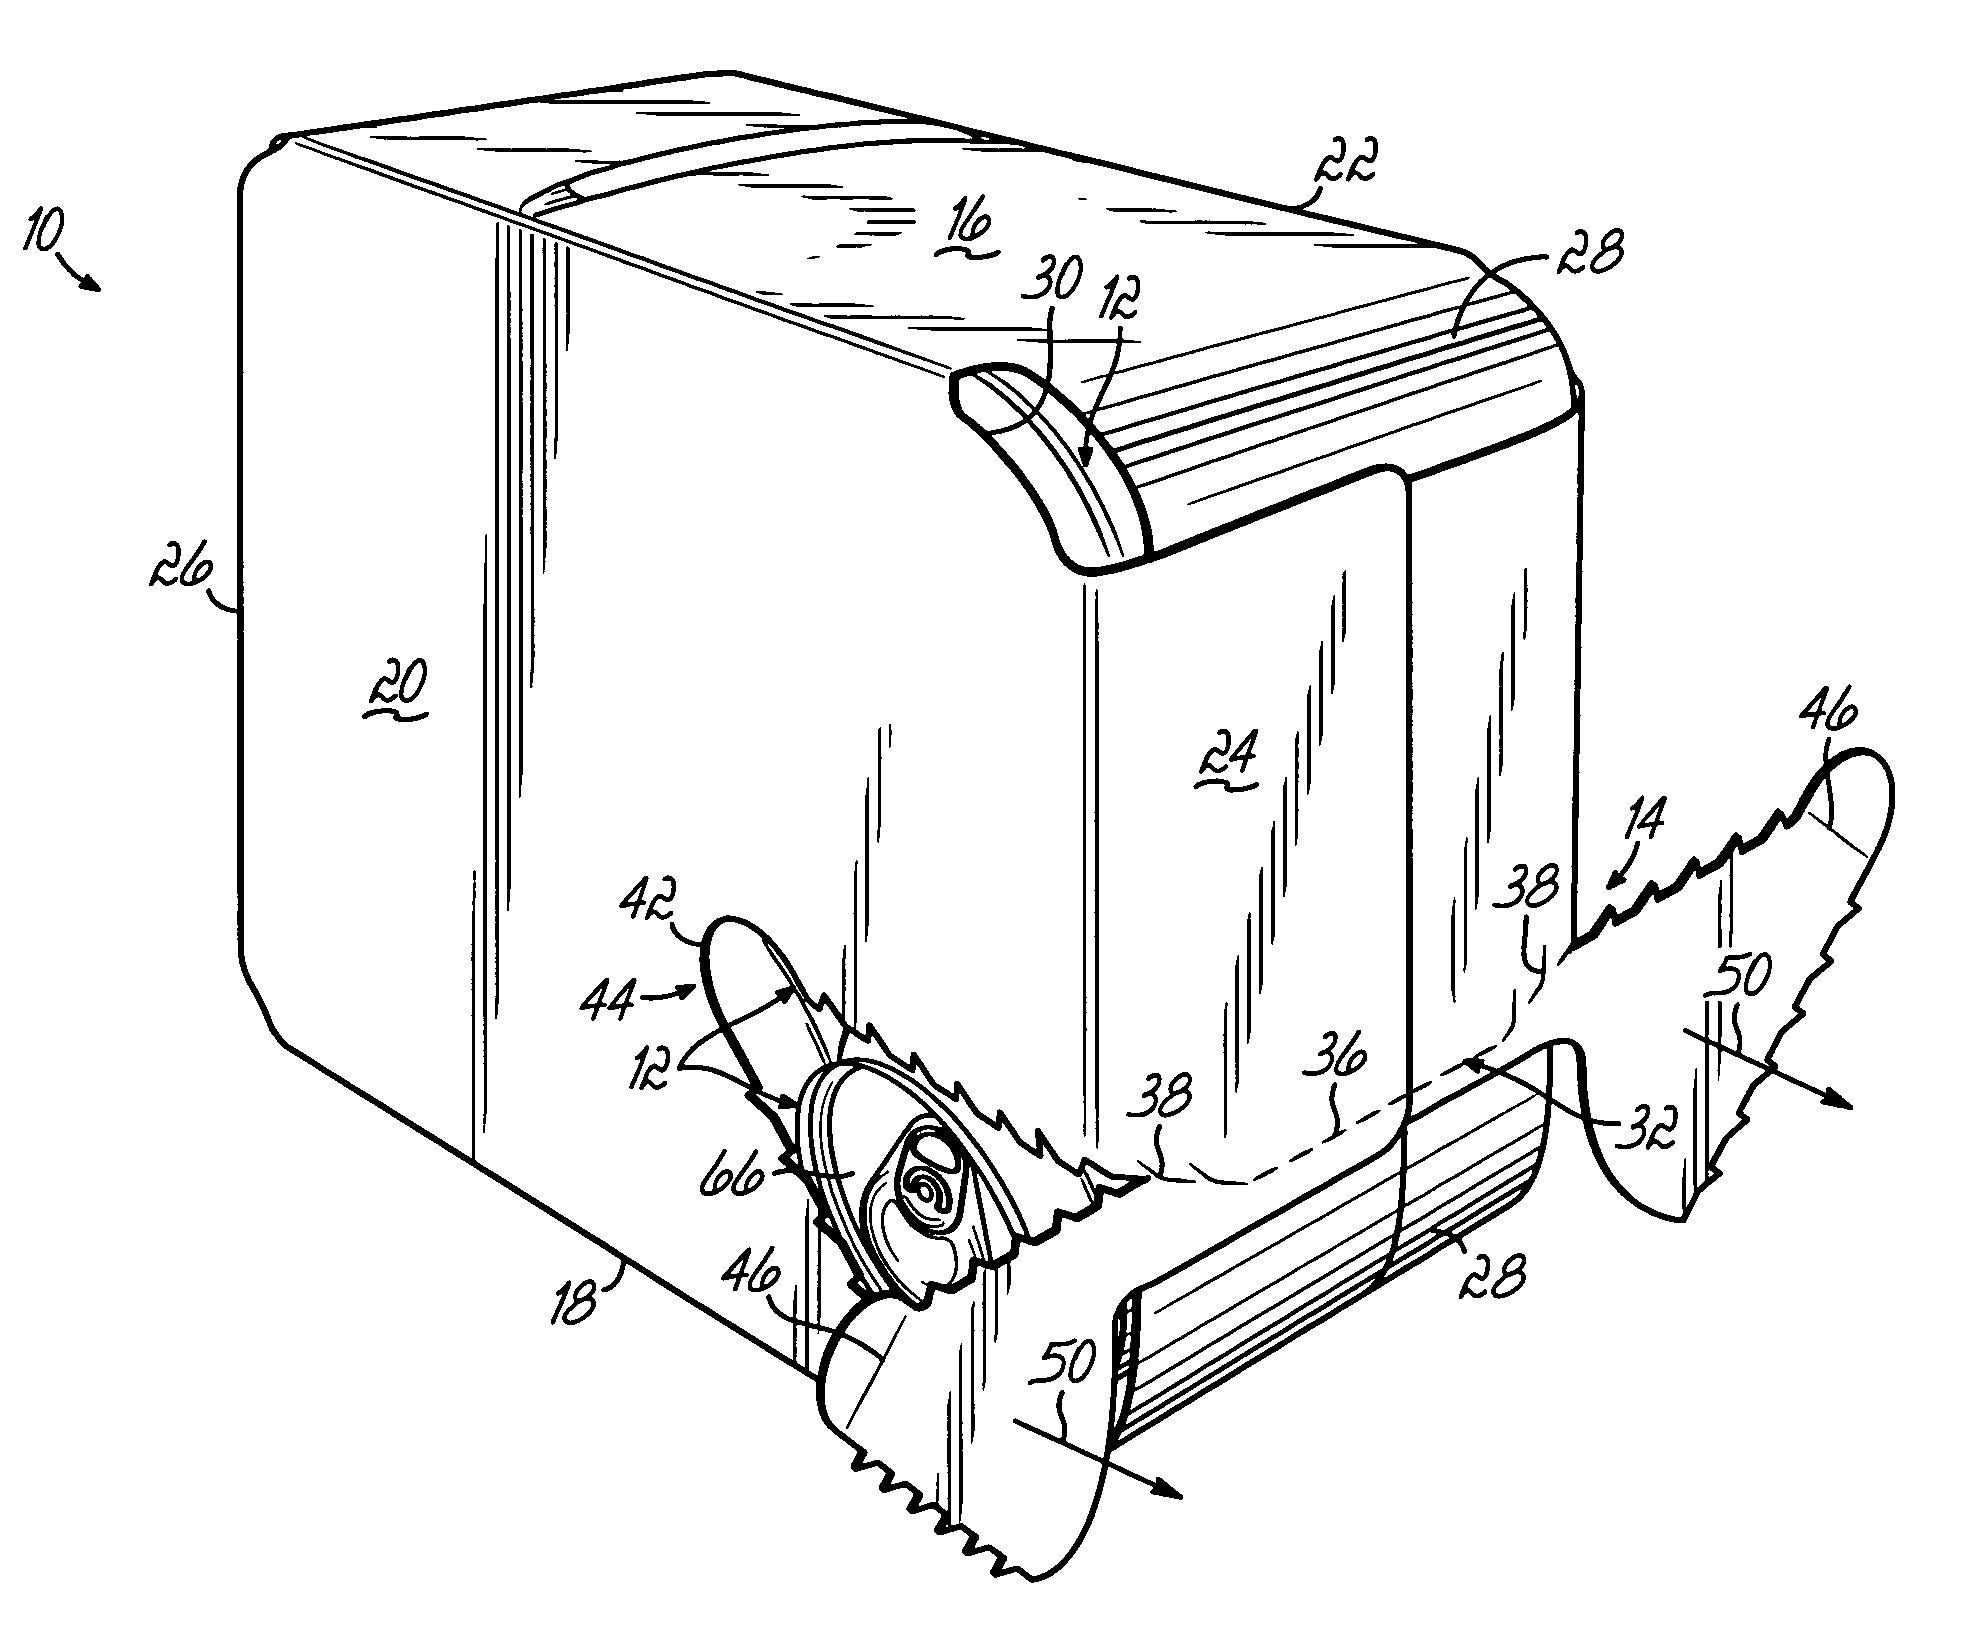 Contoured carton with dispenser